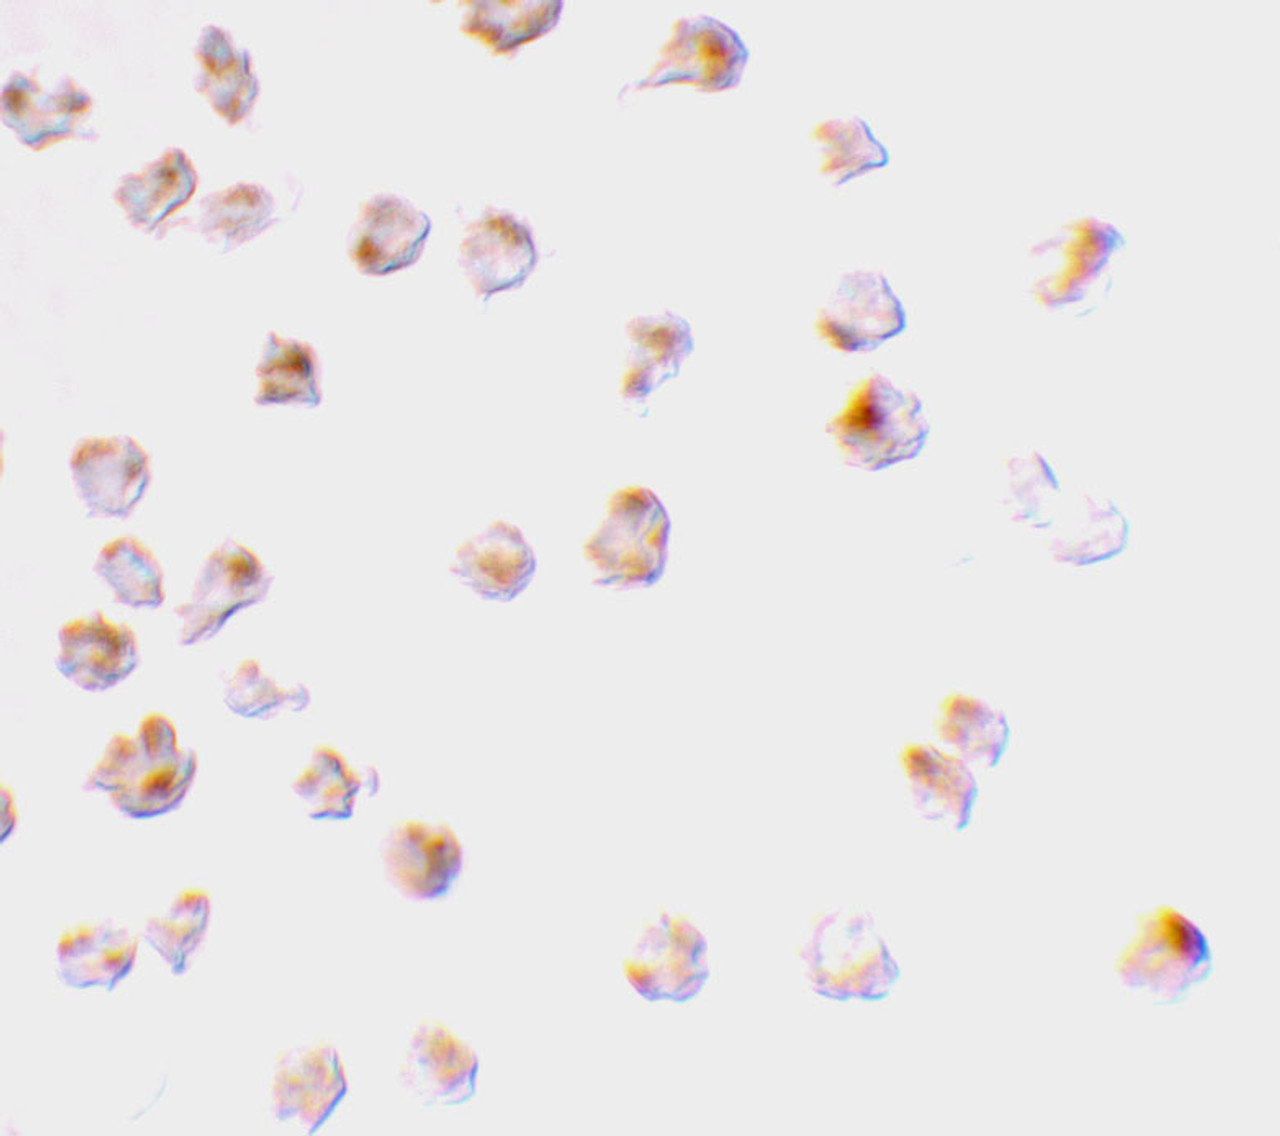 Immunocytochemistry staining of Raji cells using Mcl-1 antibody at 2 ug/mL.